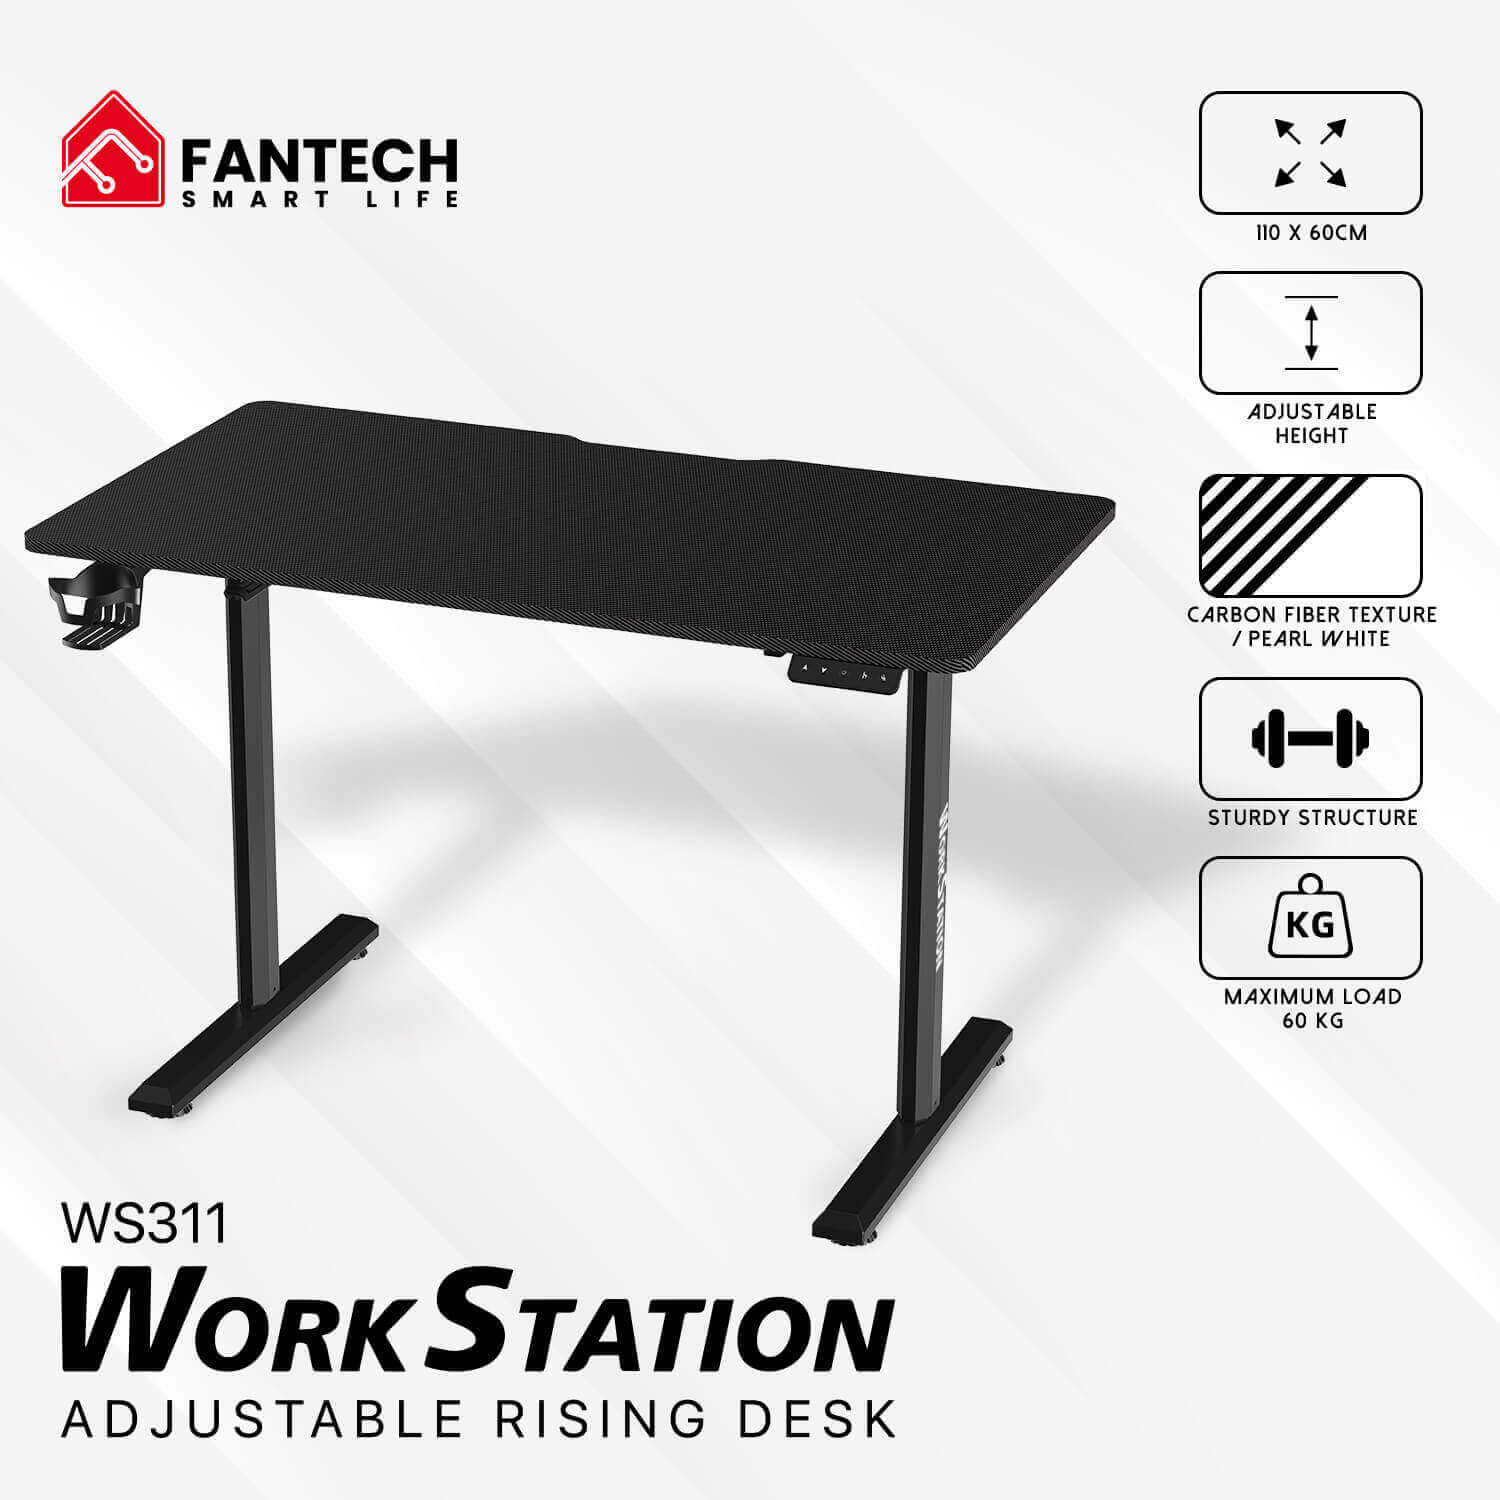 FANTECH WORKSTATION WS311 BLACK